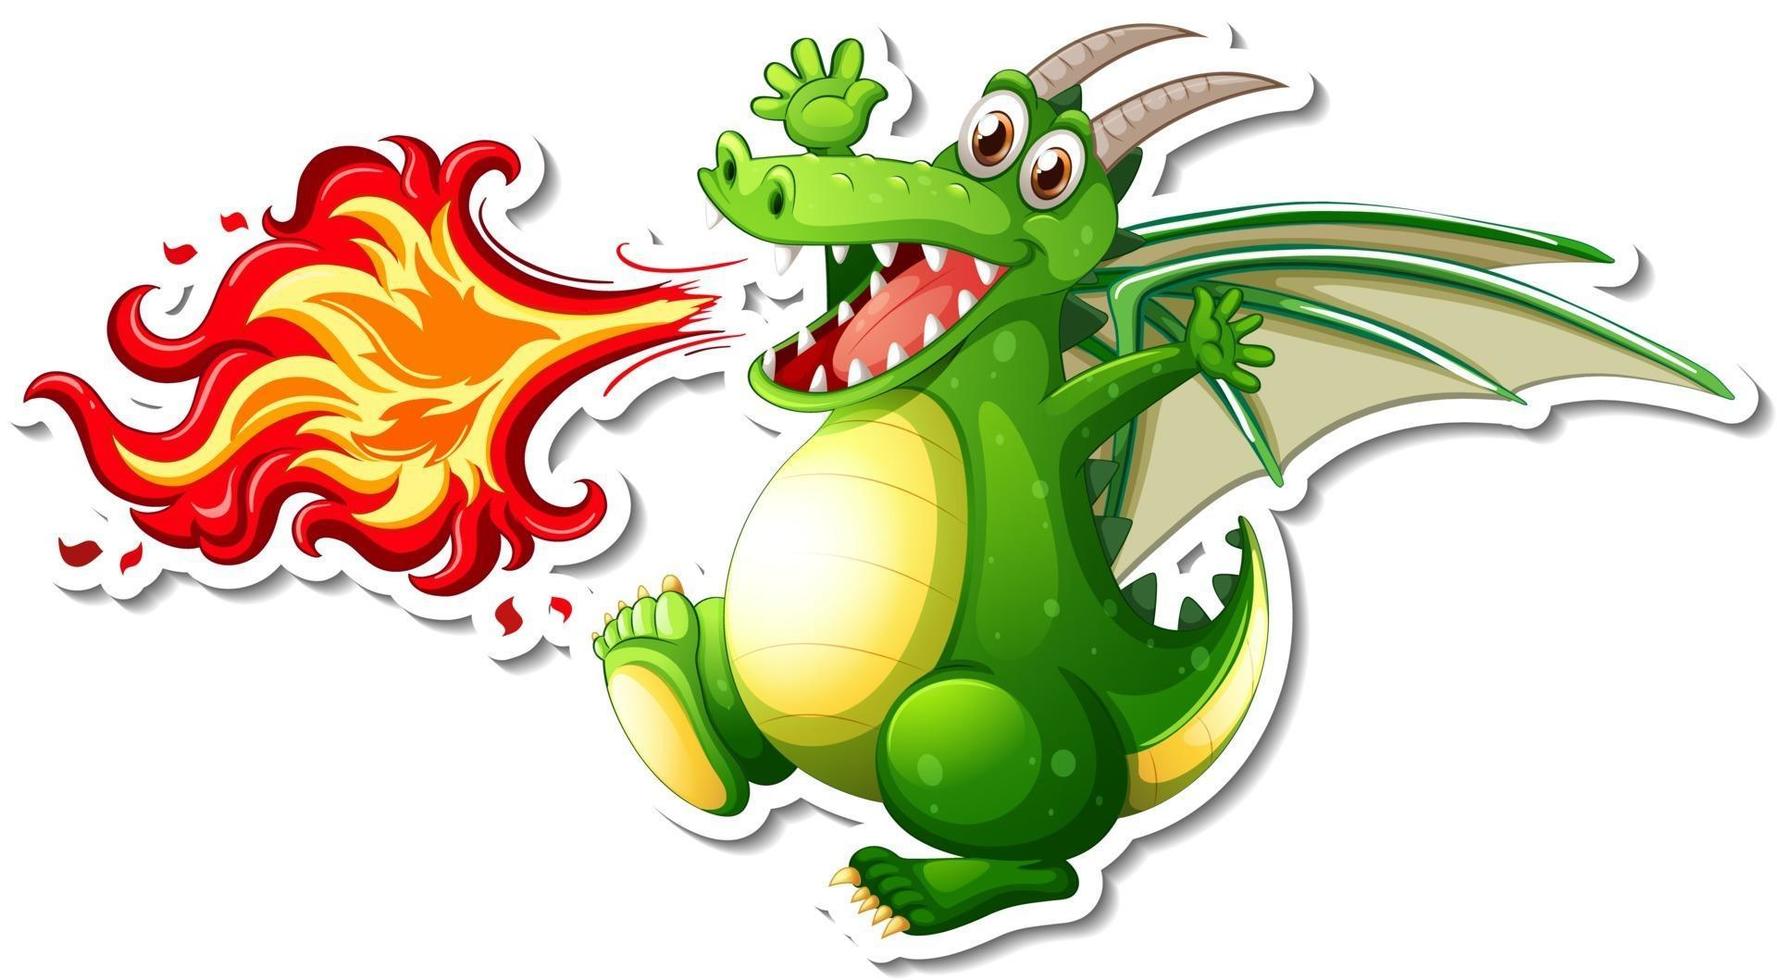 Cute Dragon cartoon character sticker vector